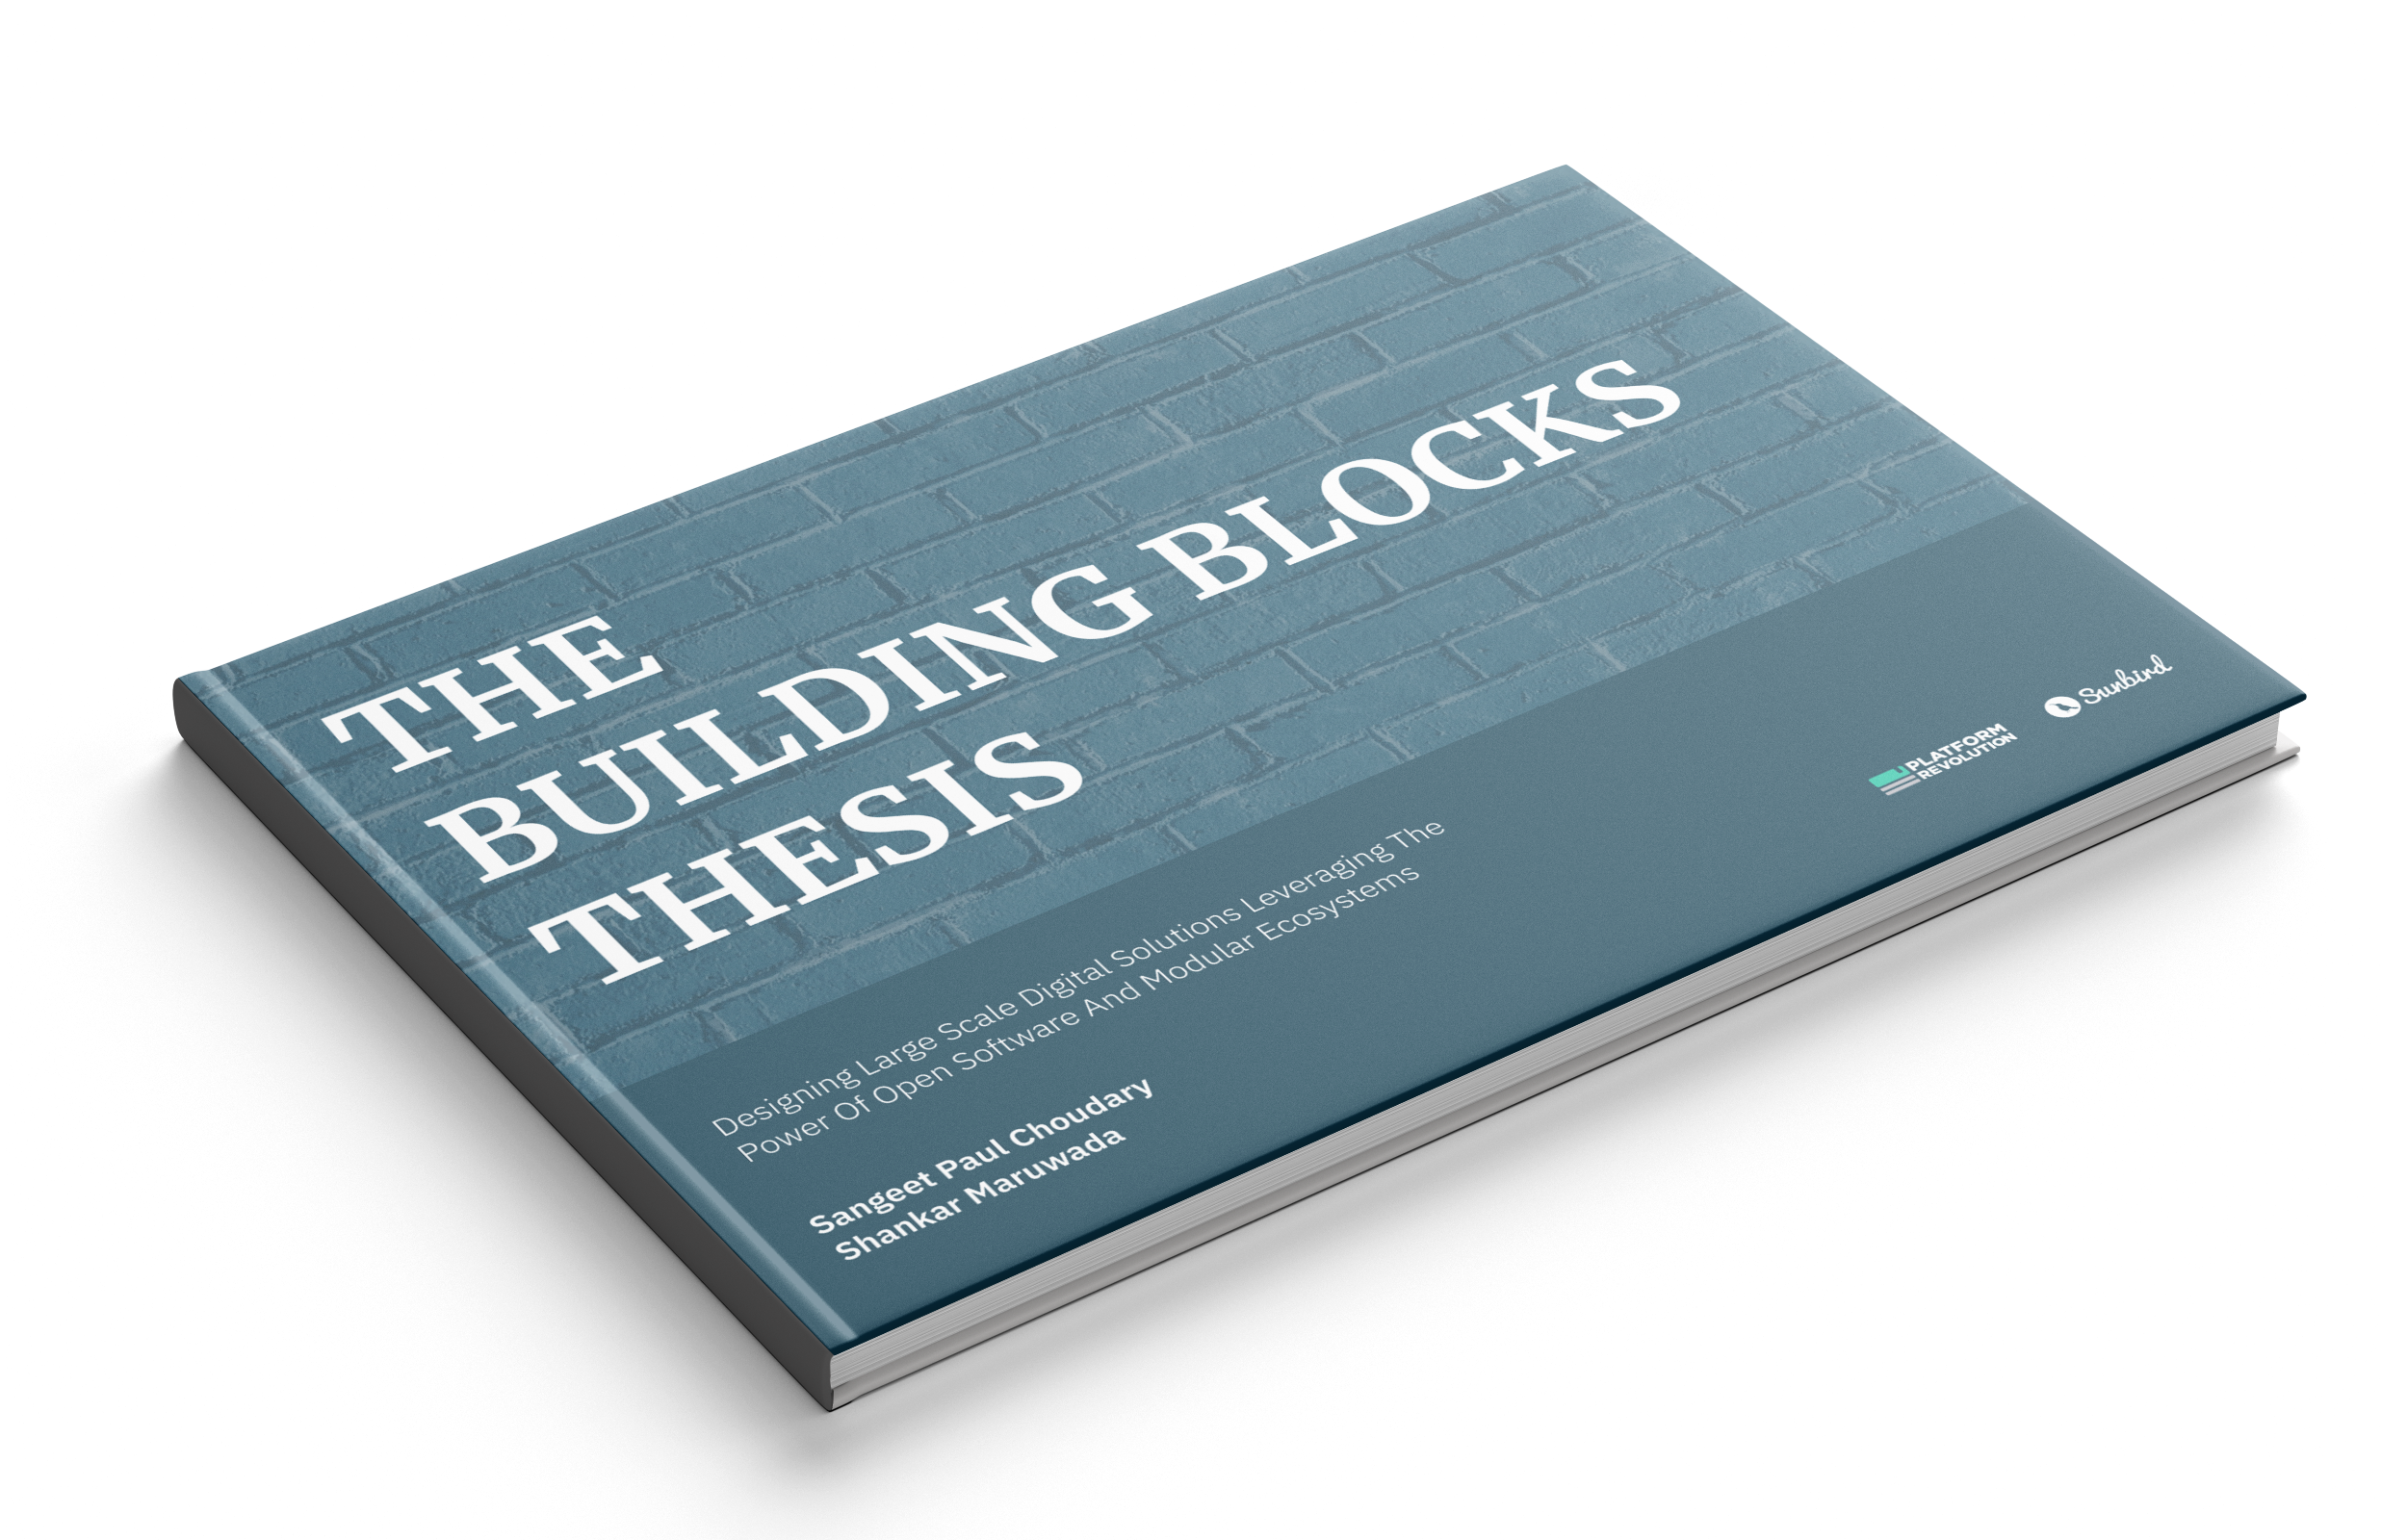 The Building Blocks Thesis – Deep-Dive Report